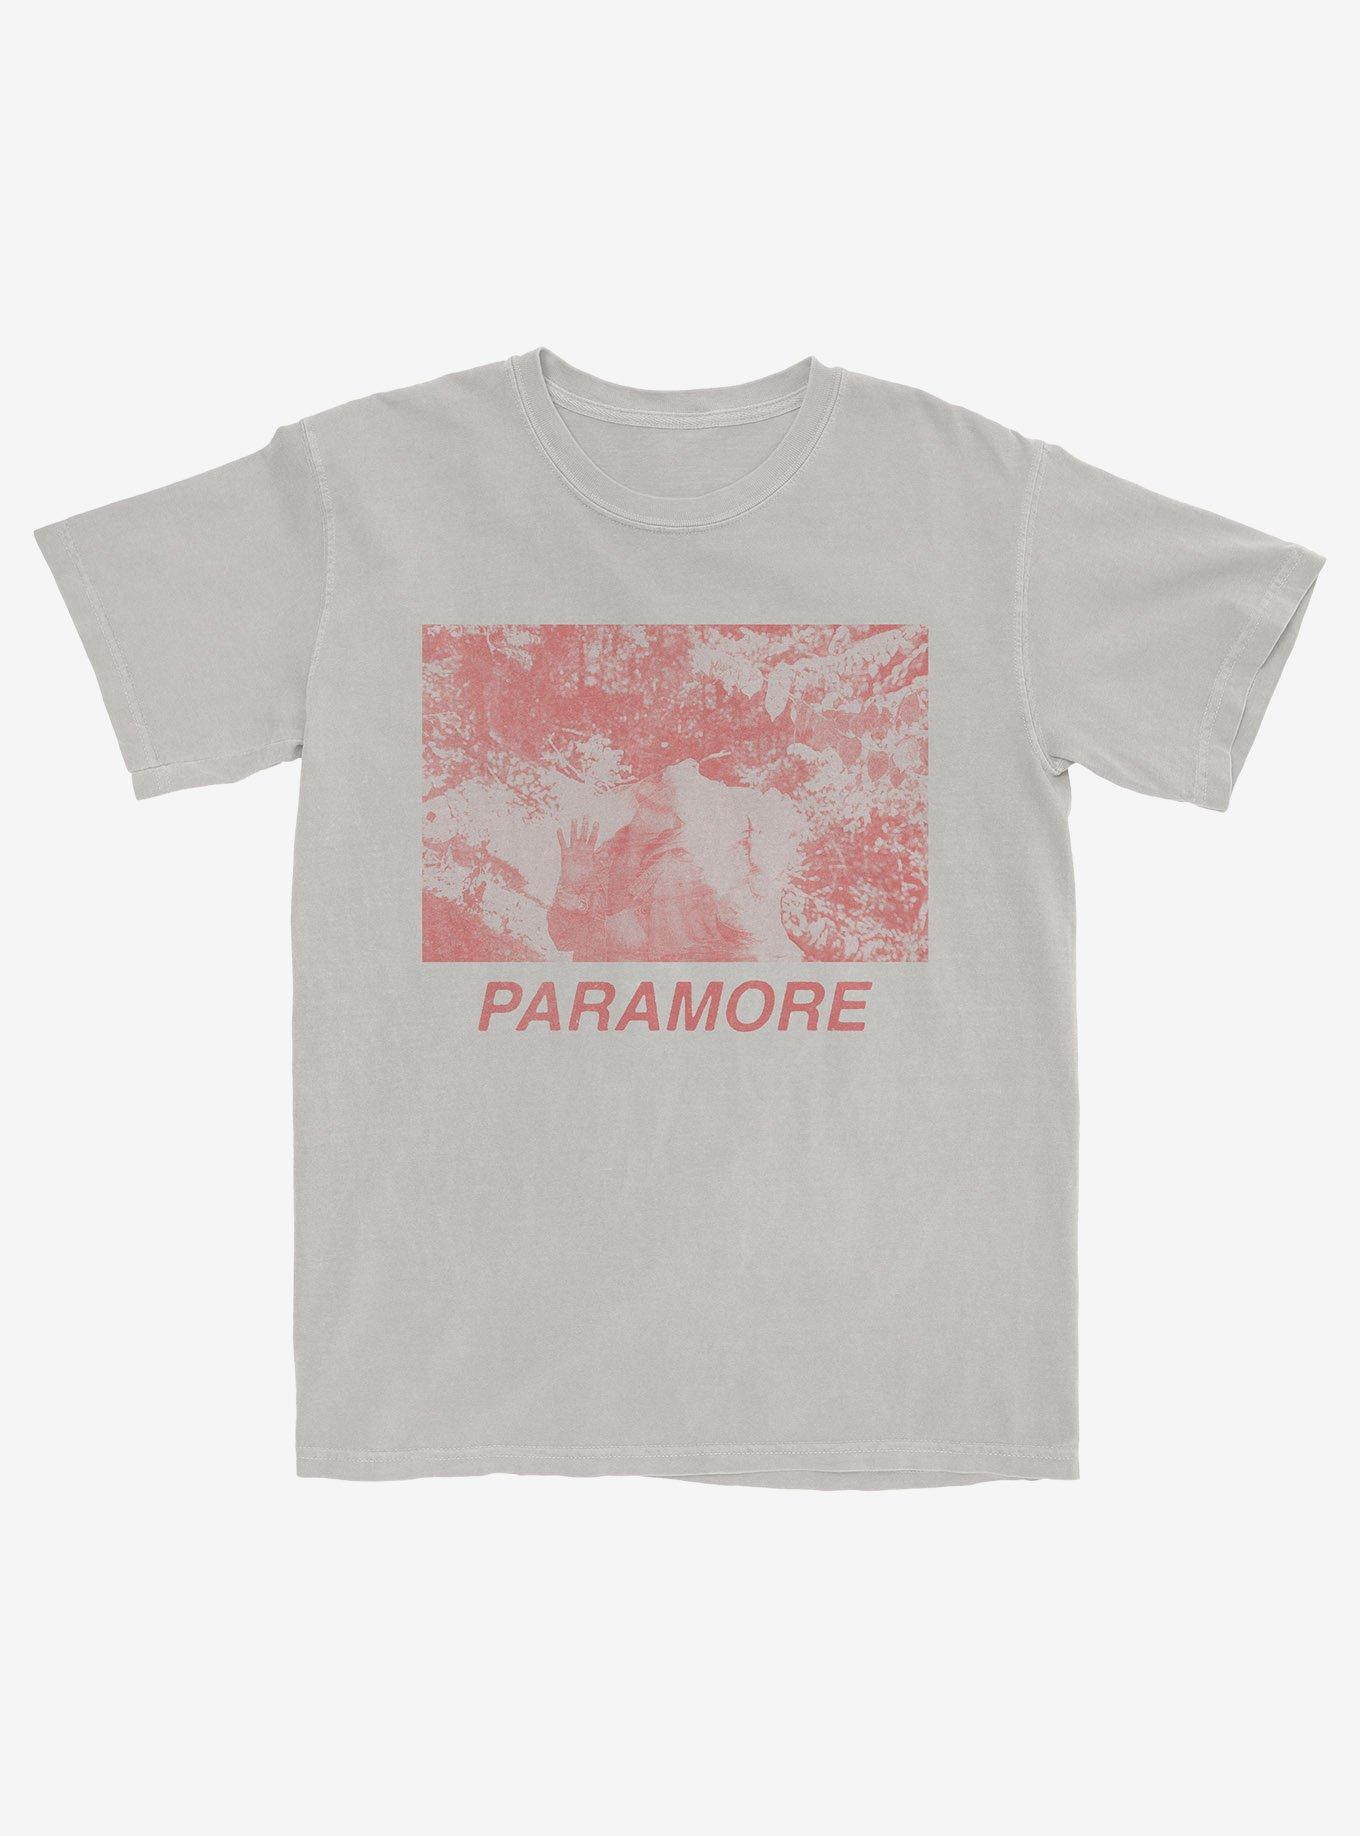 Paramore Forest Boyfriend Fit Girls T-Shirt, GREY, hi-res